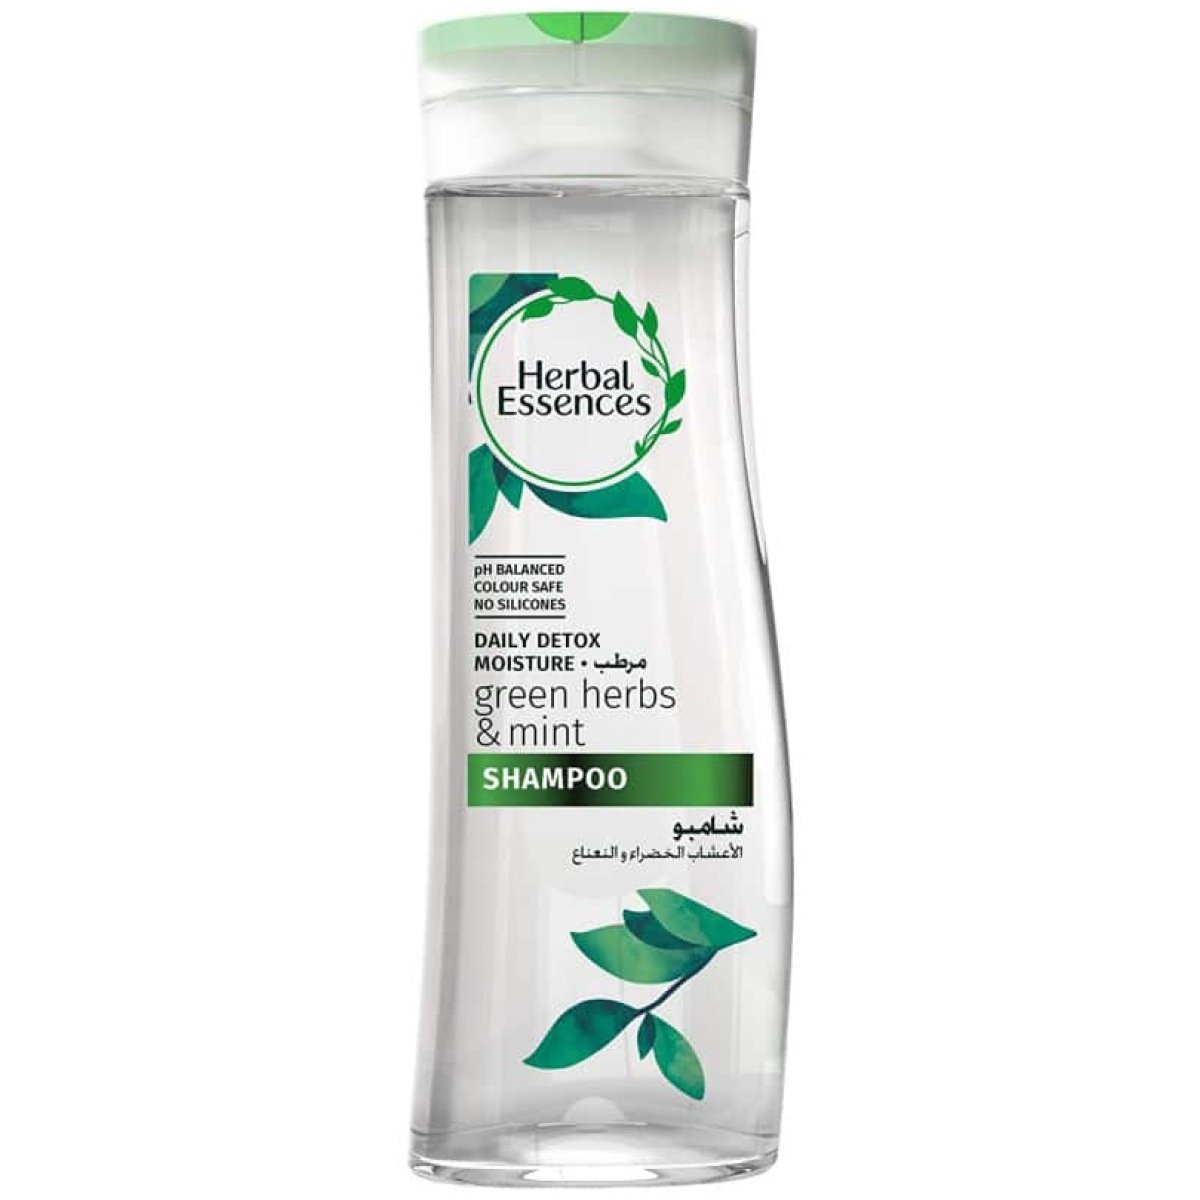 Herbal Essences Daily Detox Moisture Green Herbs & Mint Shampoo 400ml